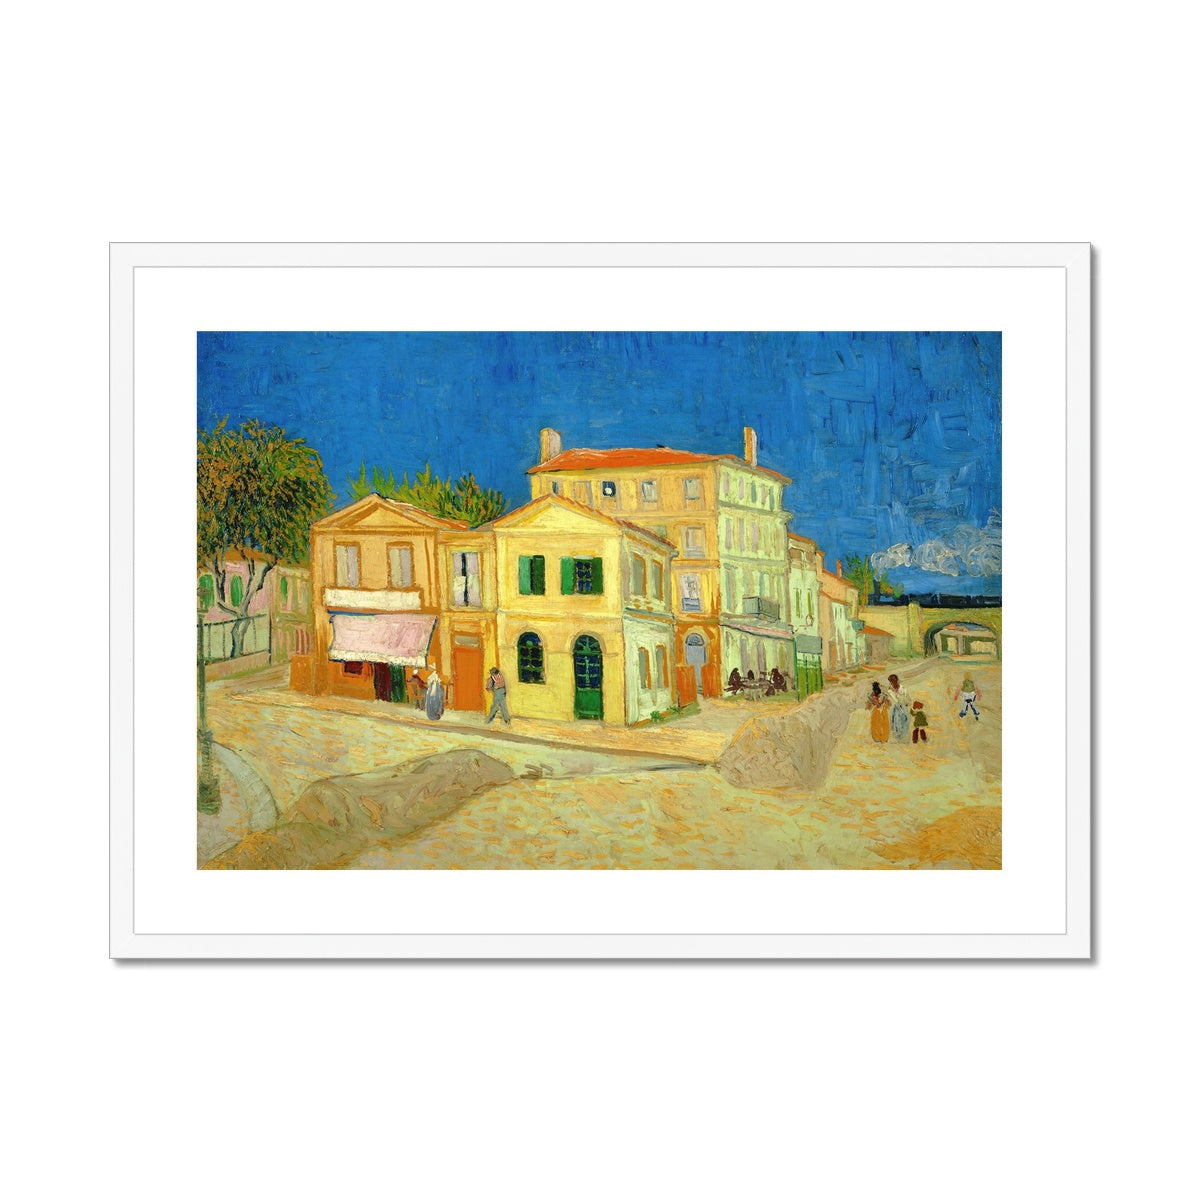 Vincent Van Gogh Framed Open Edition Art Print. 'The Yellow House'. Art Gallery Historic Art